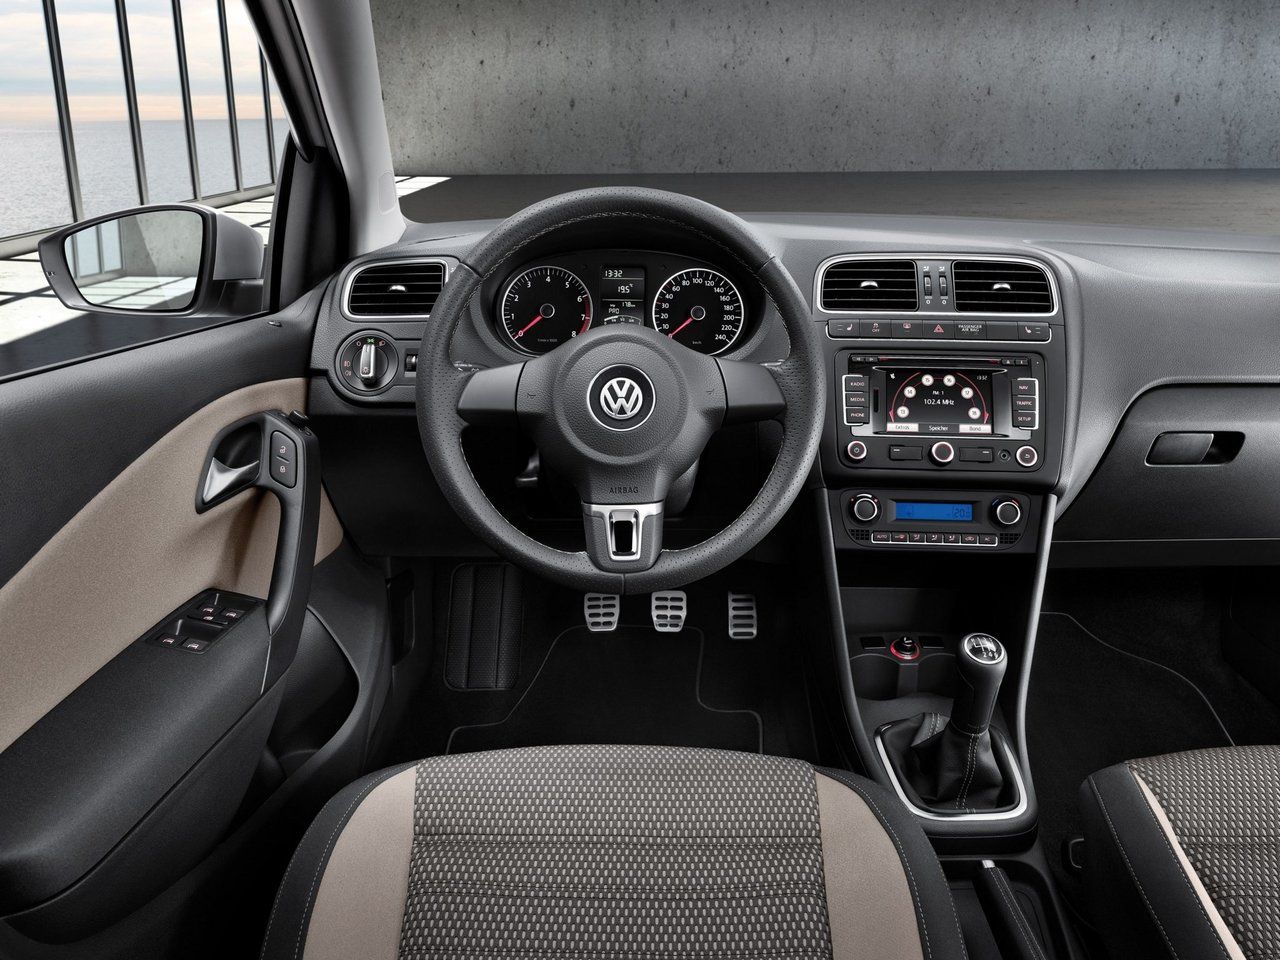 Volkswagen Polo 2011 в комплектации Trendline